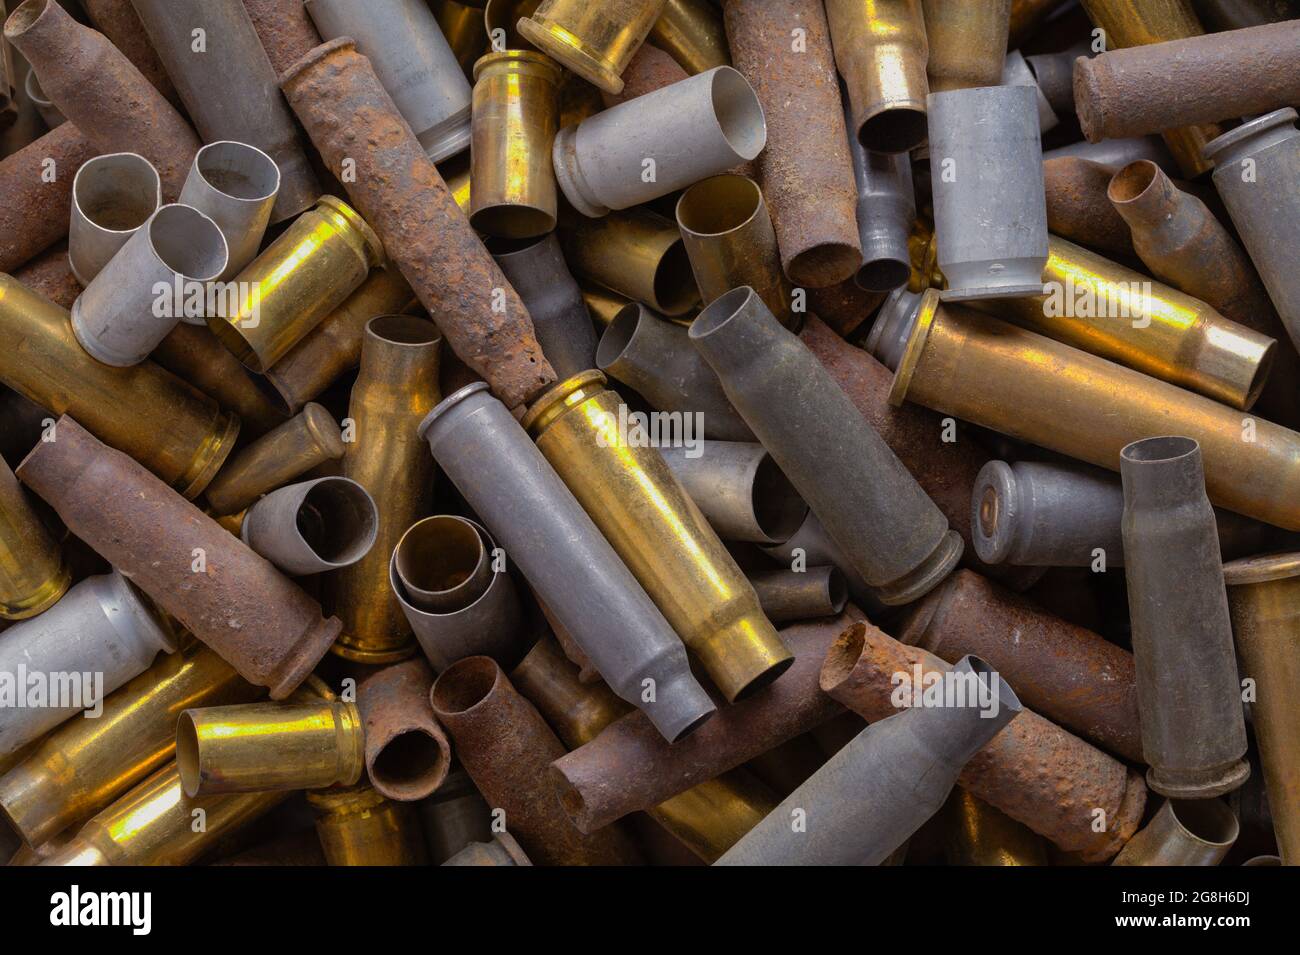 Stapel alter Munitionsgeschossschalen Hintergrund. Stockfoto